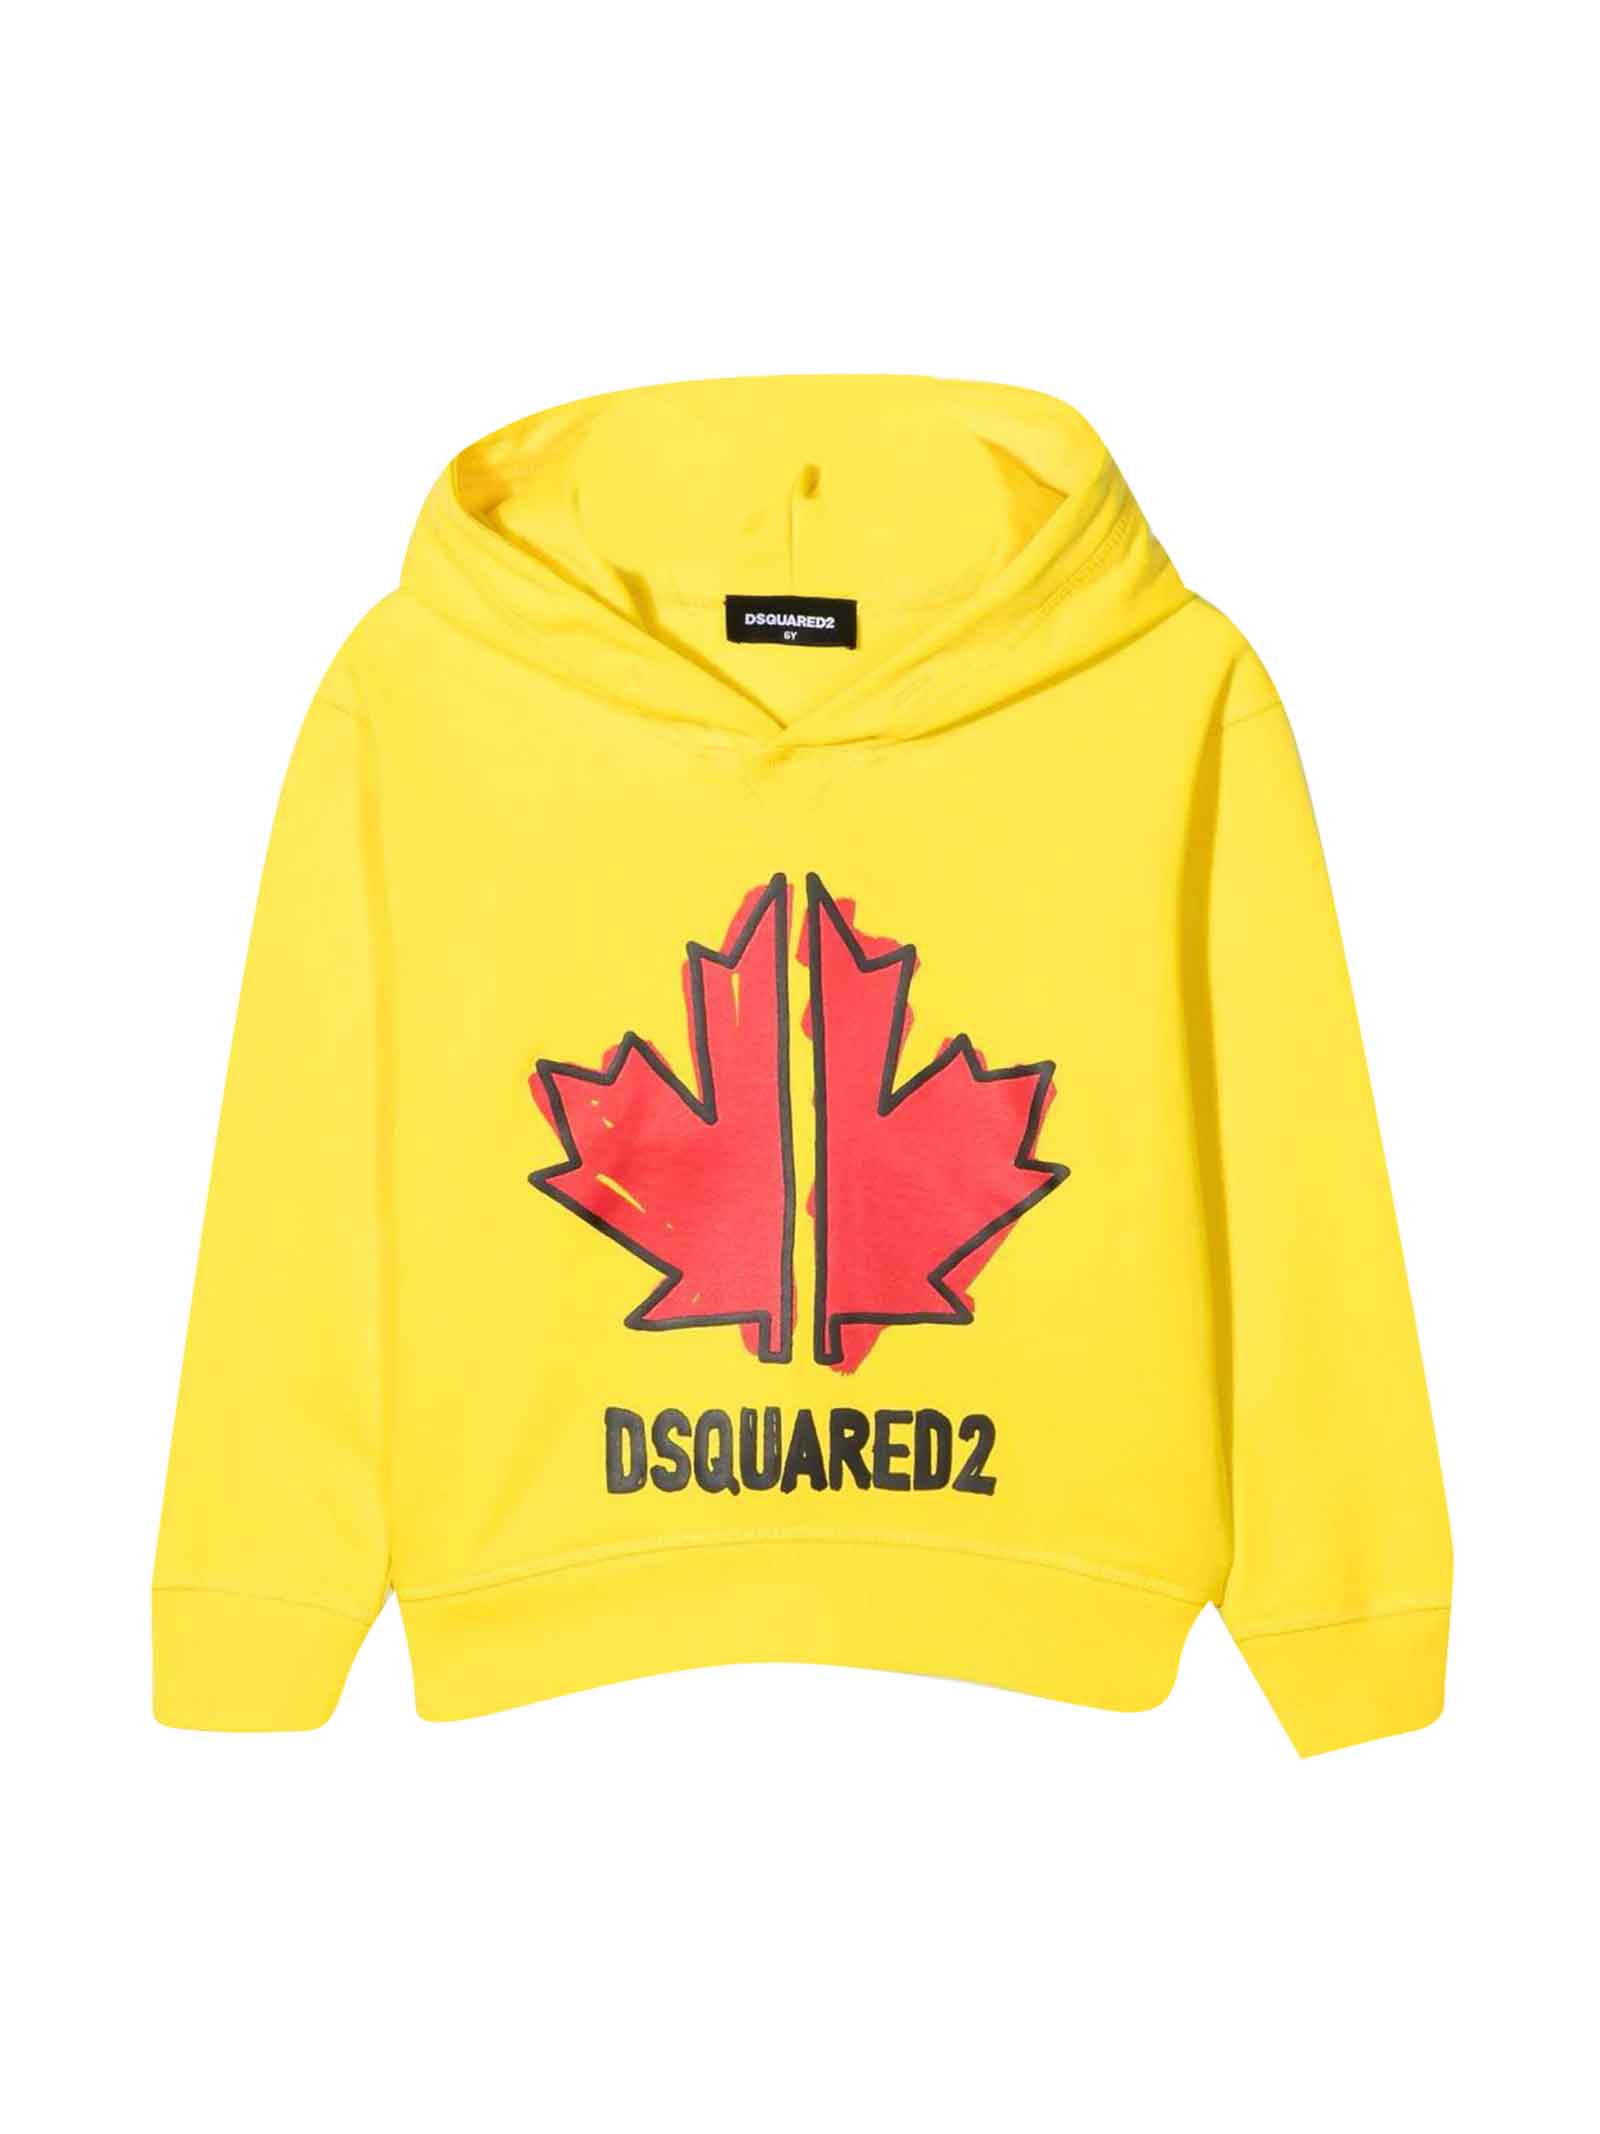 Dsquared2 Yellow Sweatshirt Unisex